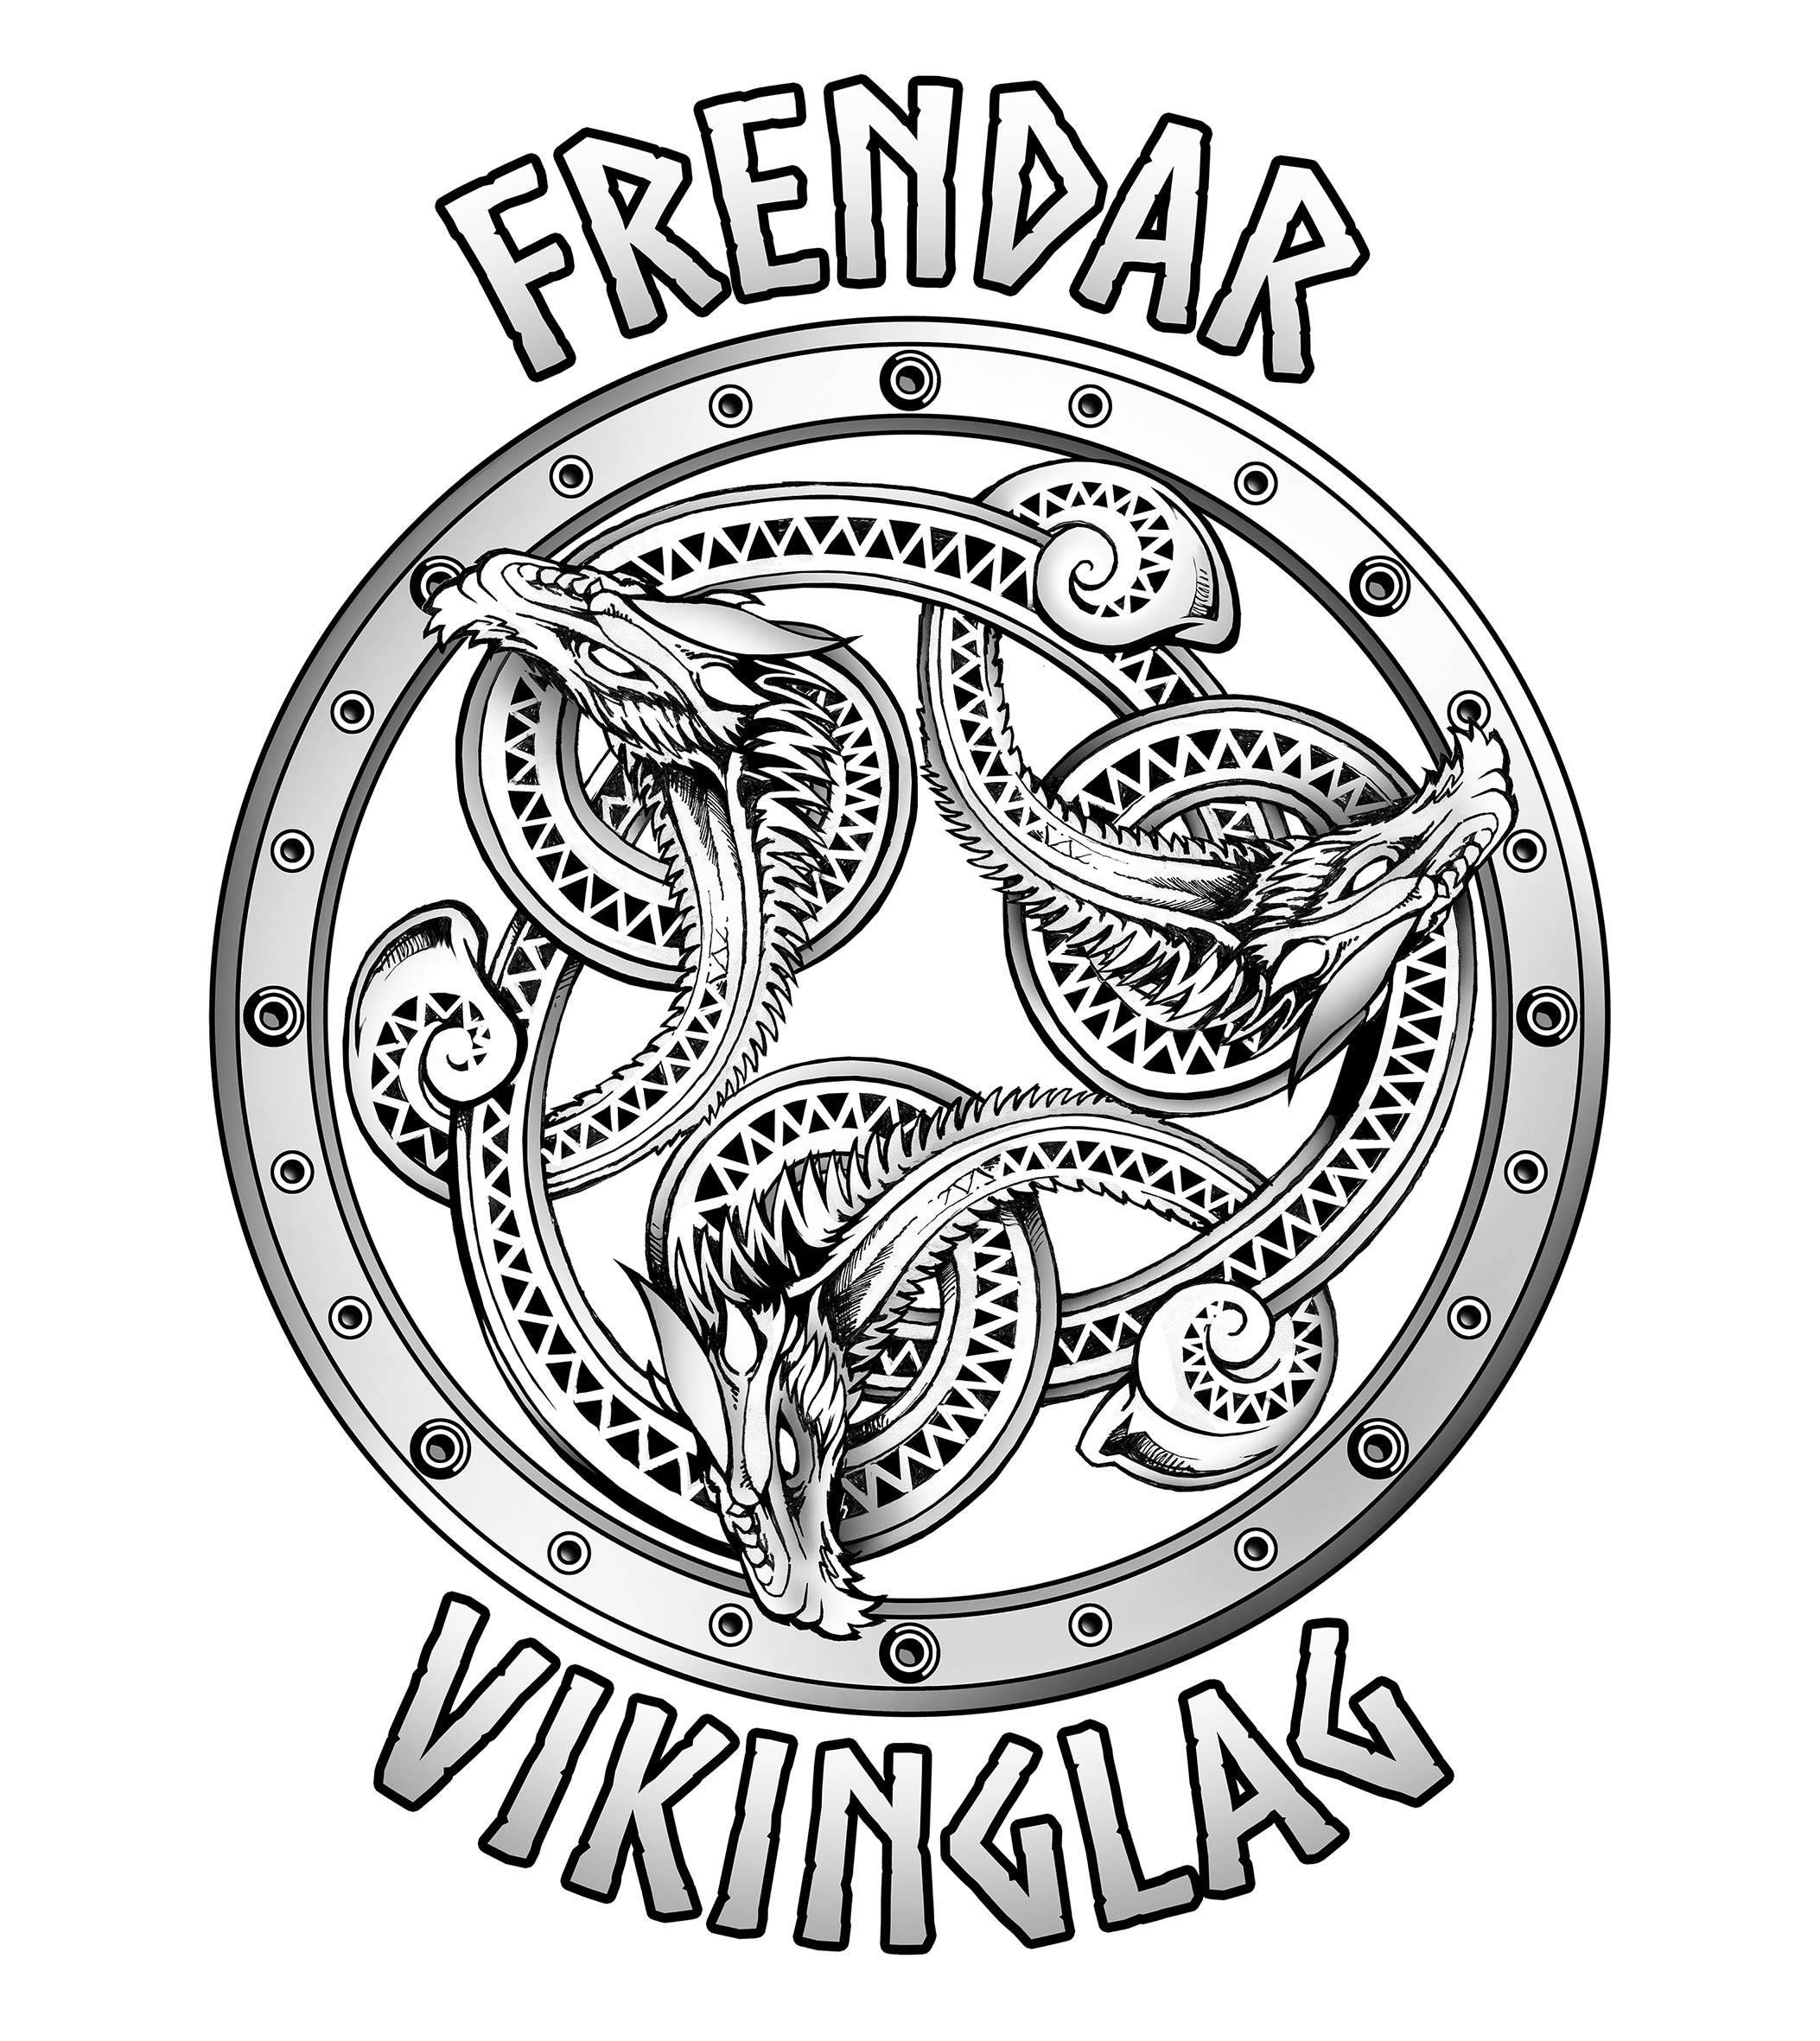 Frendar Vikinglag, Jørn Melnes